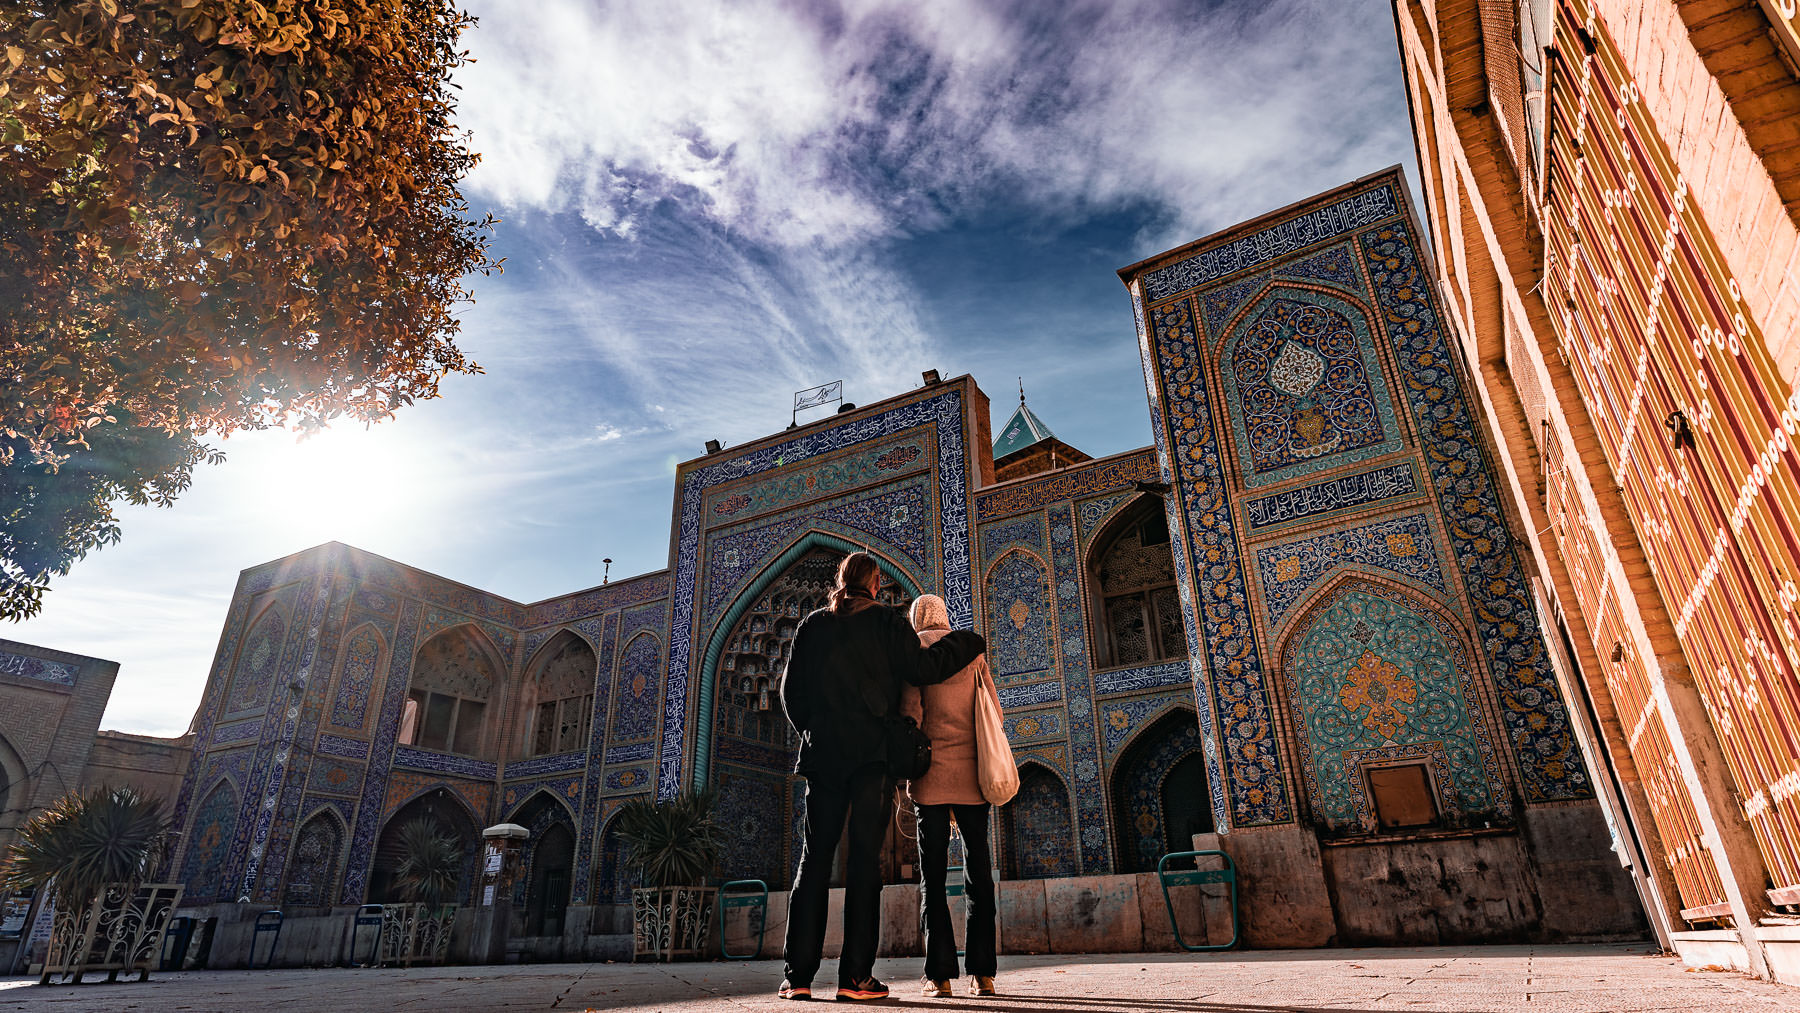 Bīdābād, Esfahan, Isfahan Province, Iran